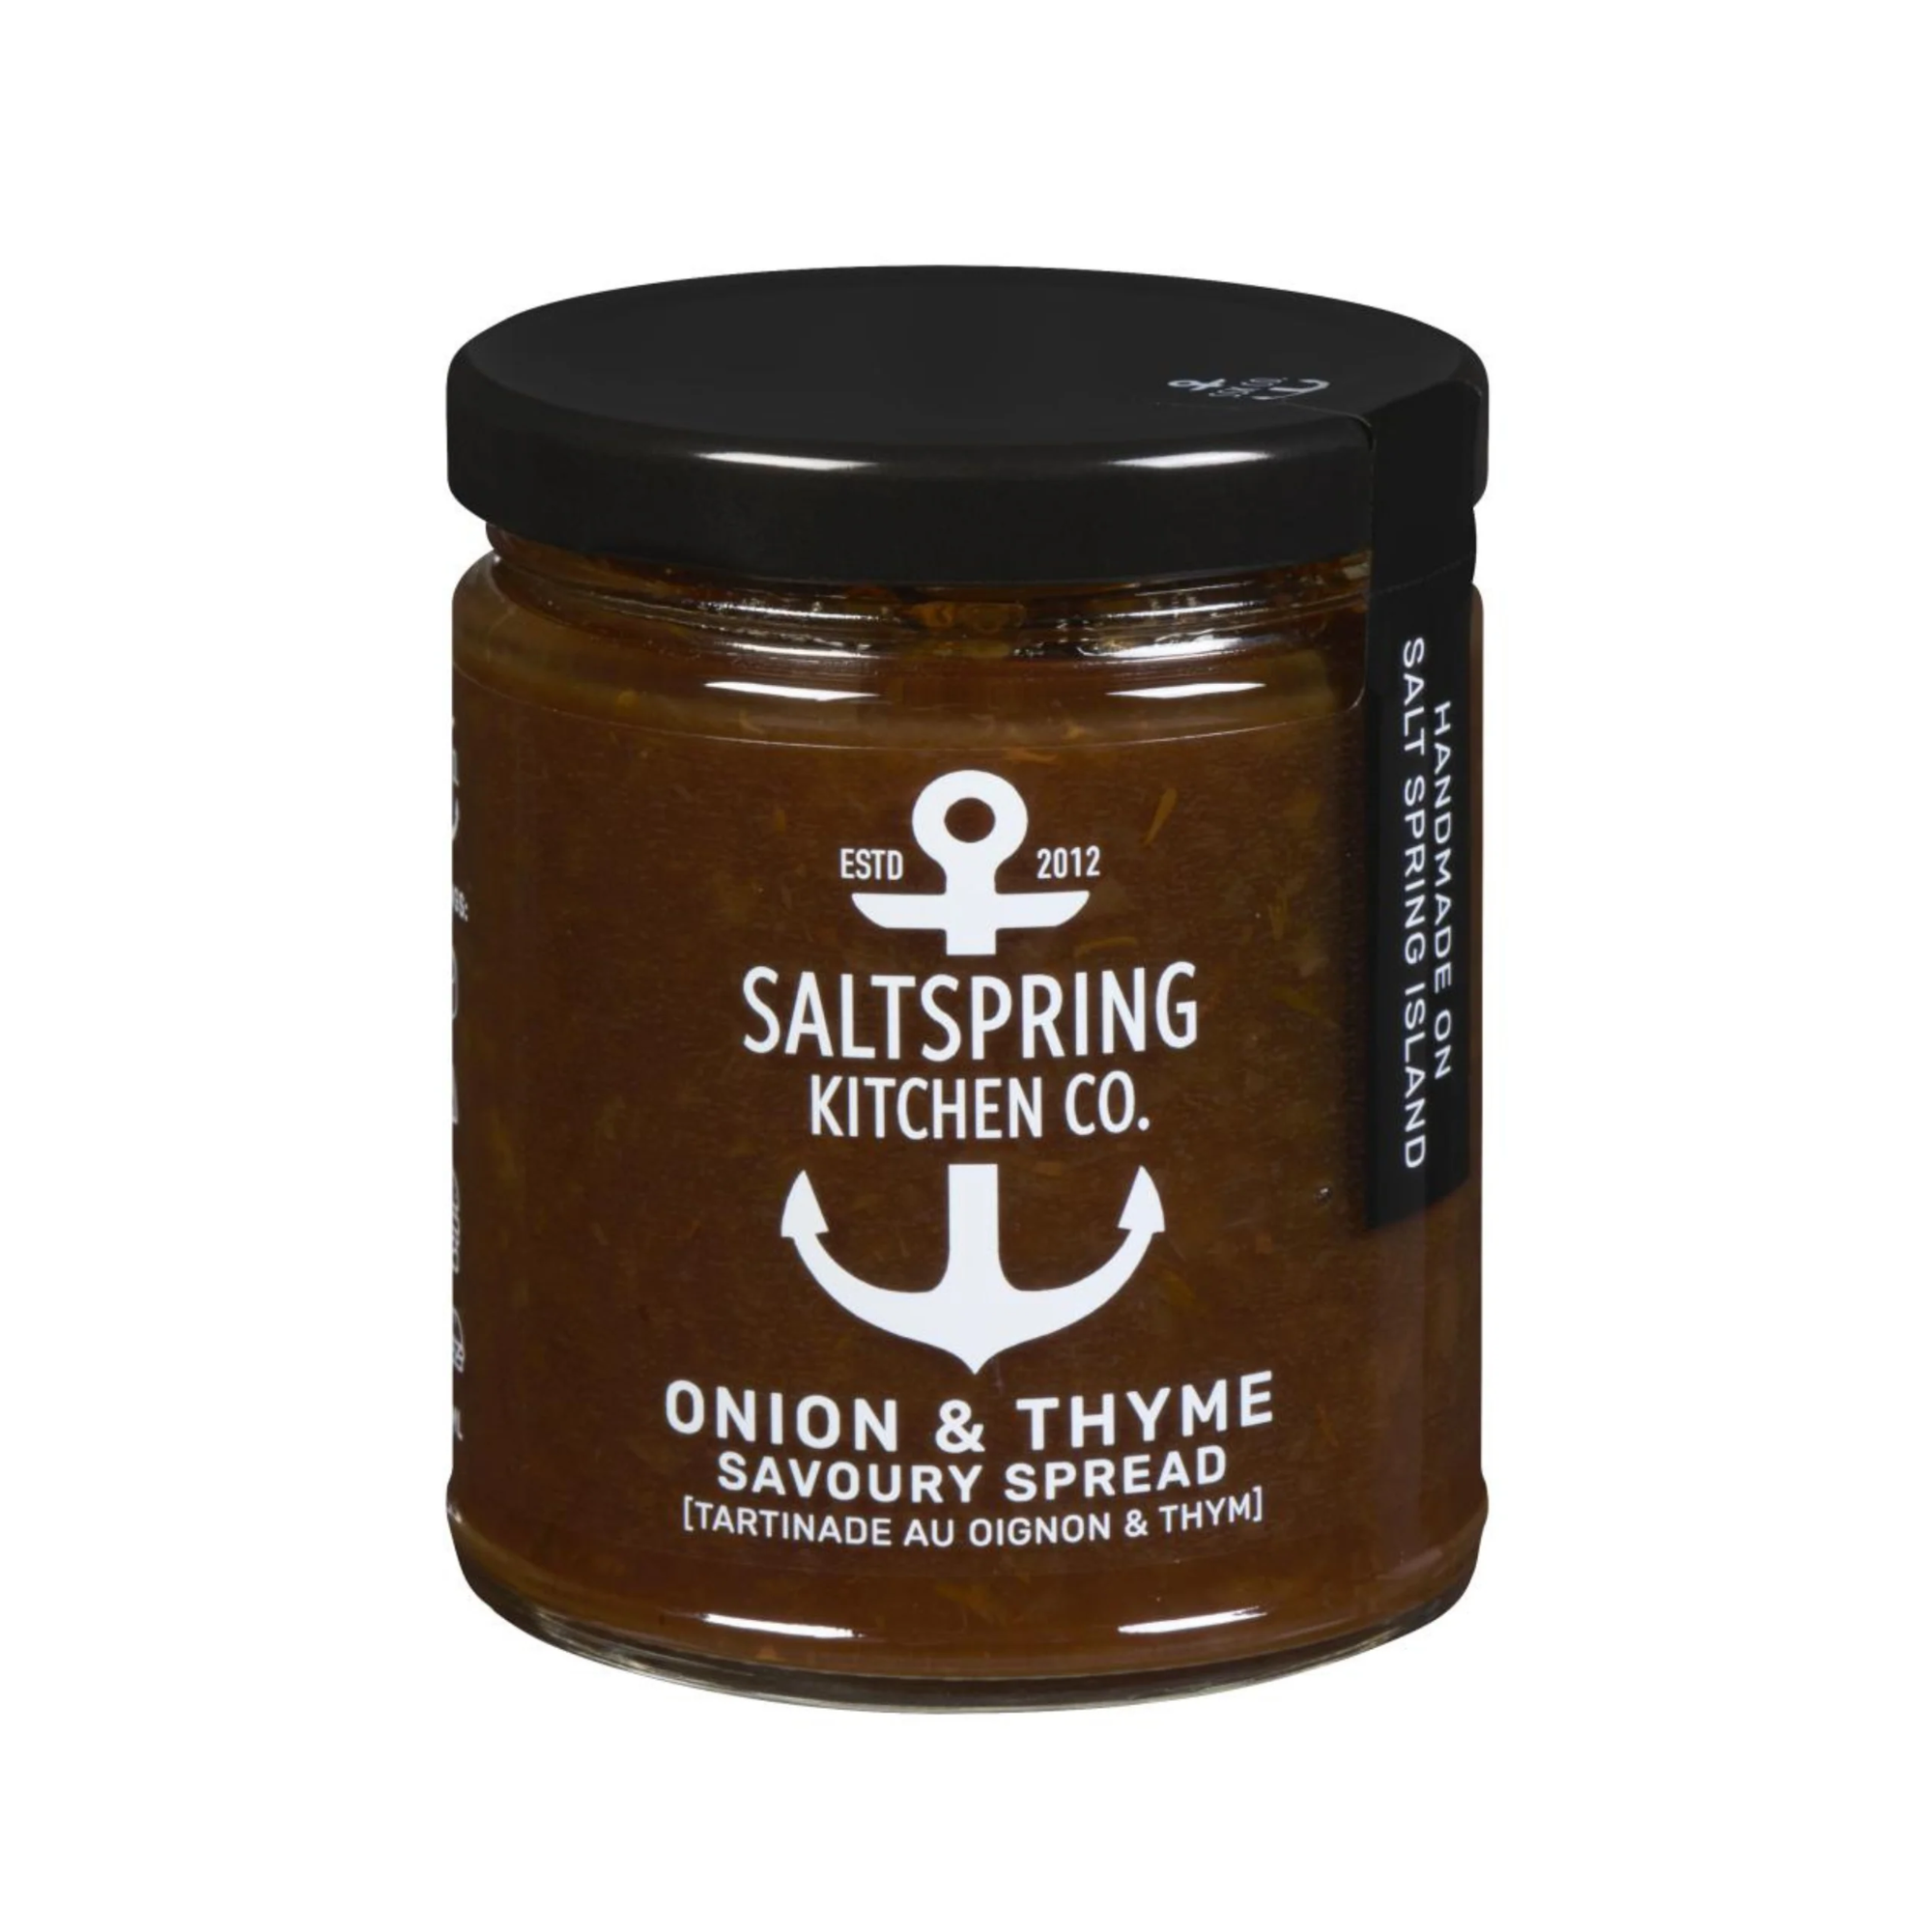 Saltspring Kitchen Co. Onion & Thyme Spread